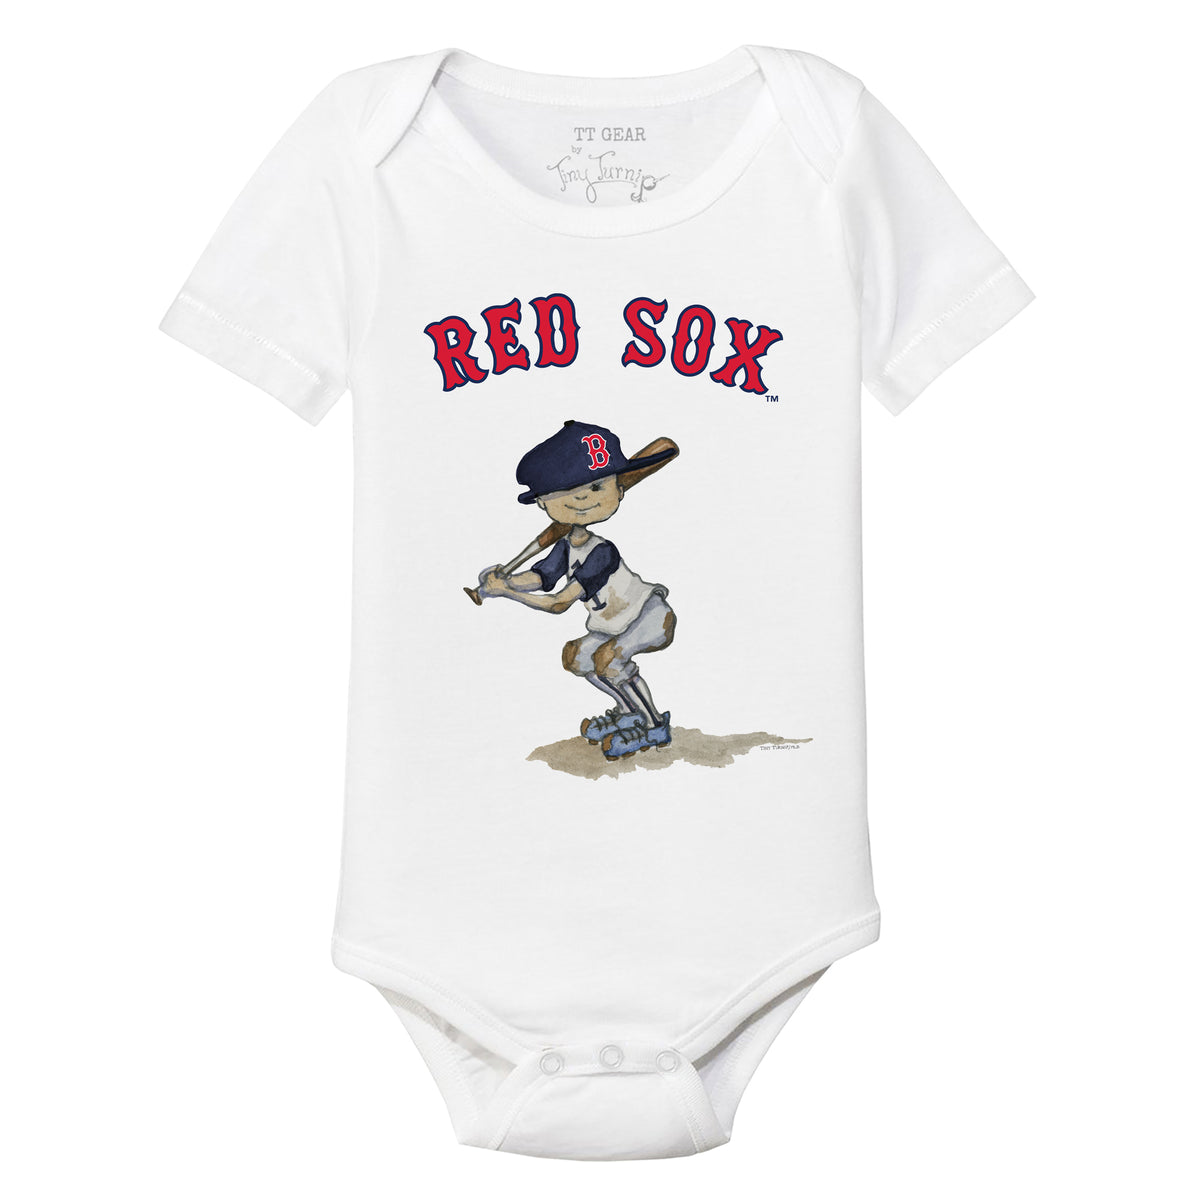 Infant Tiny Turnip Red Boston Sox Heart Bat Bodysuit